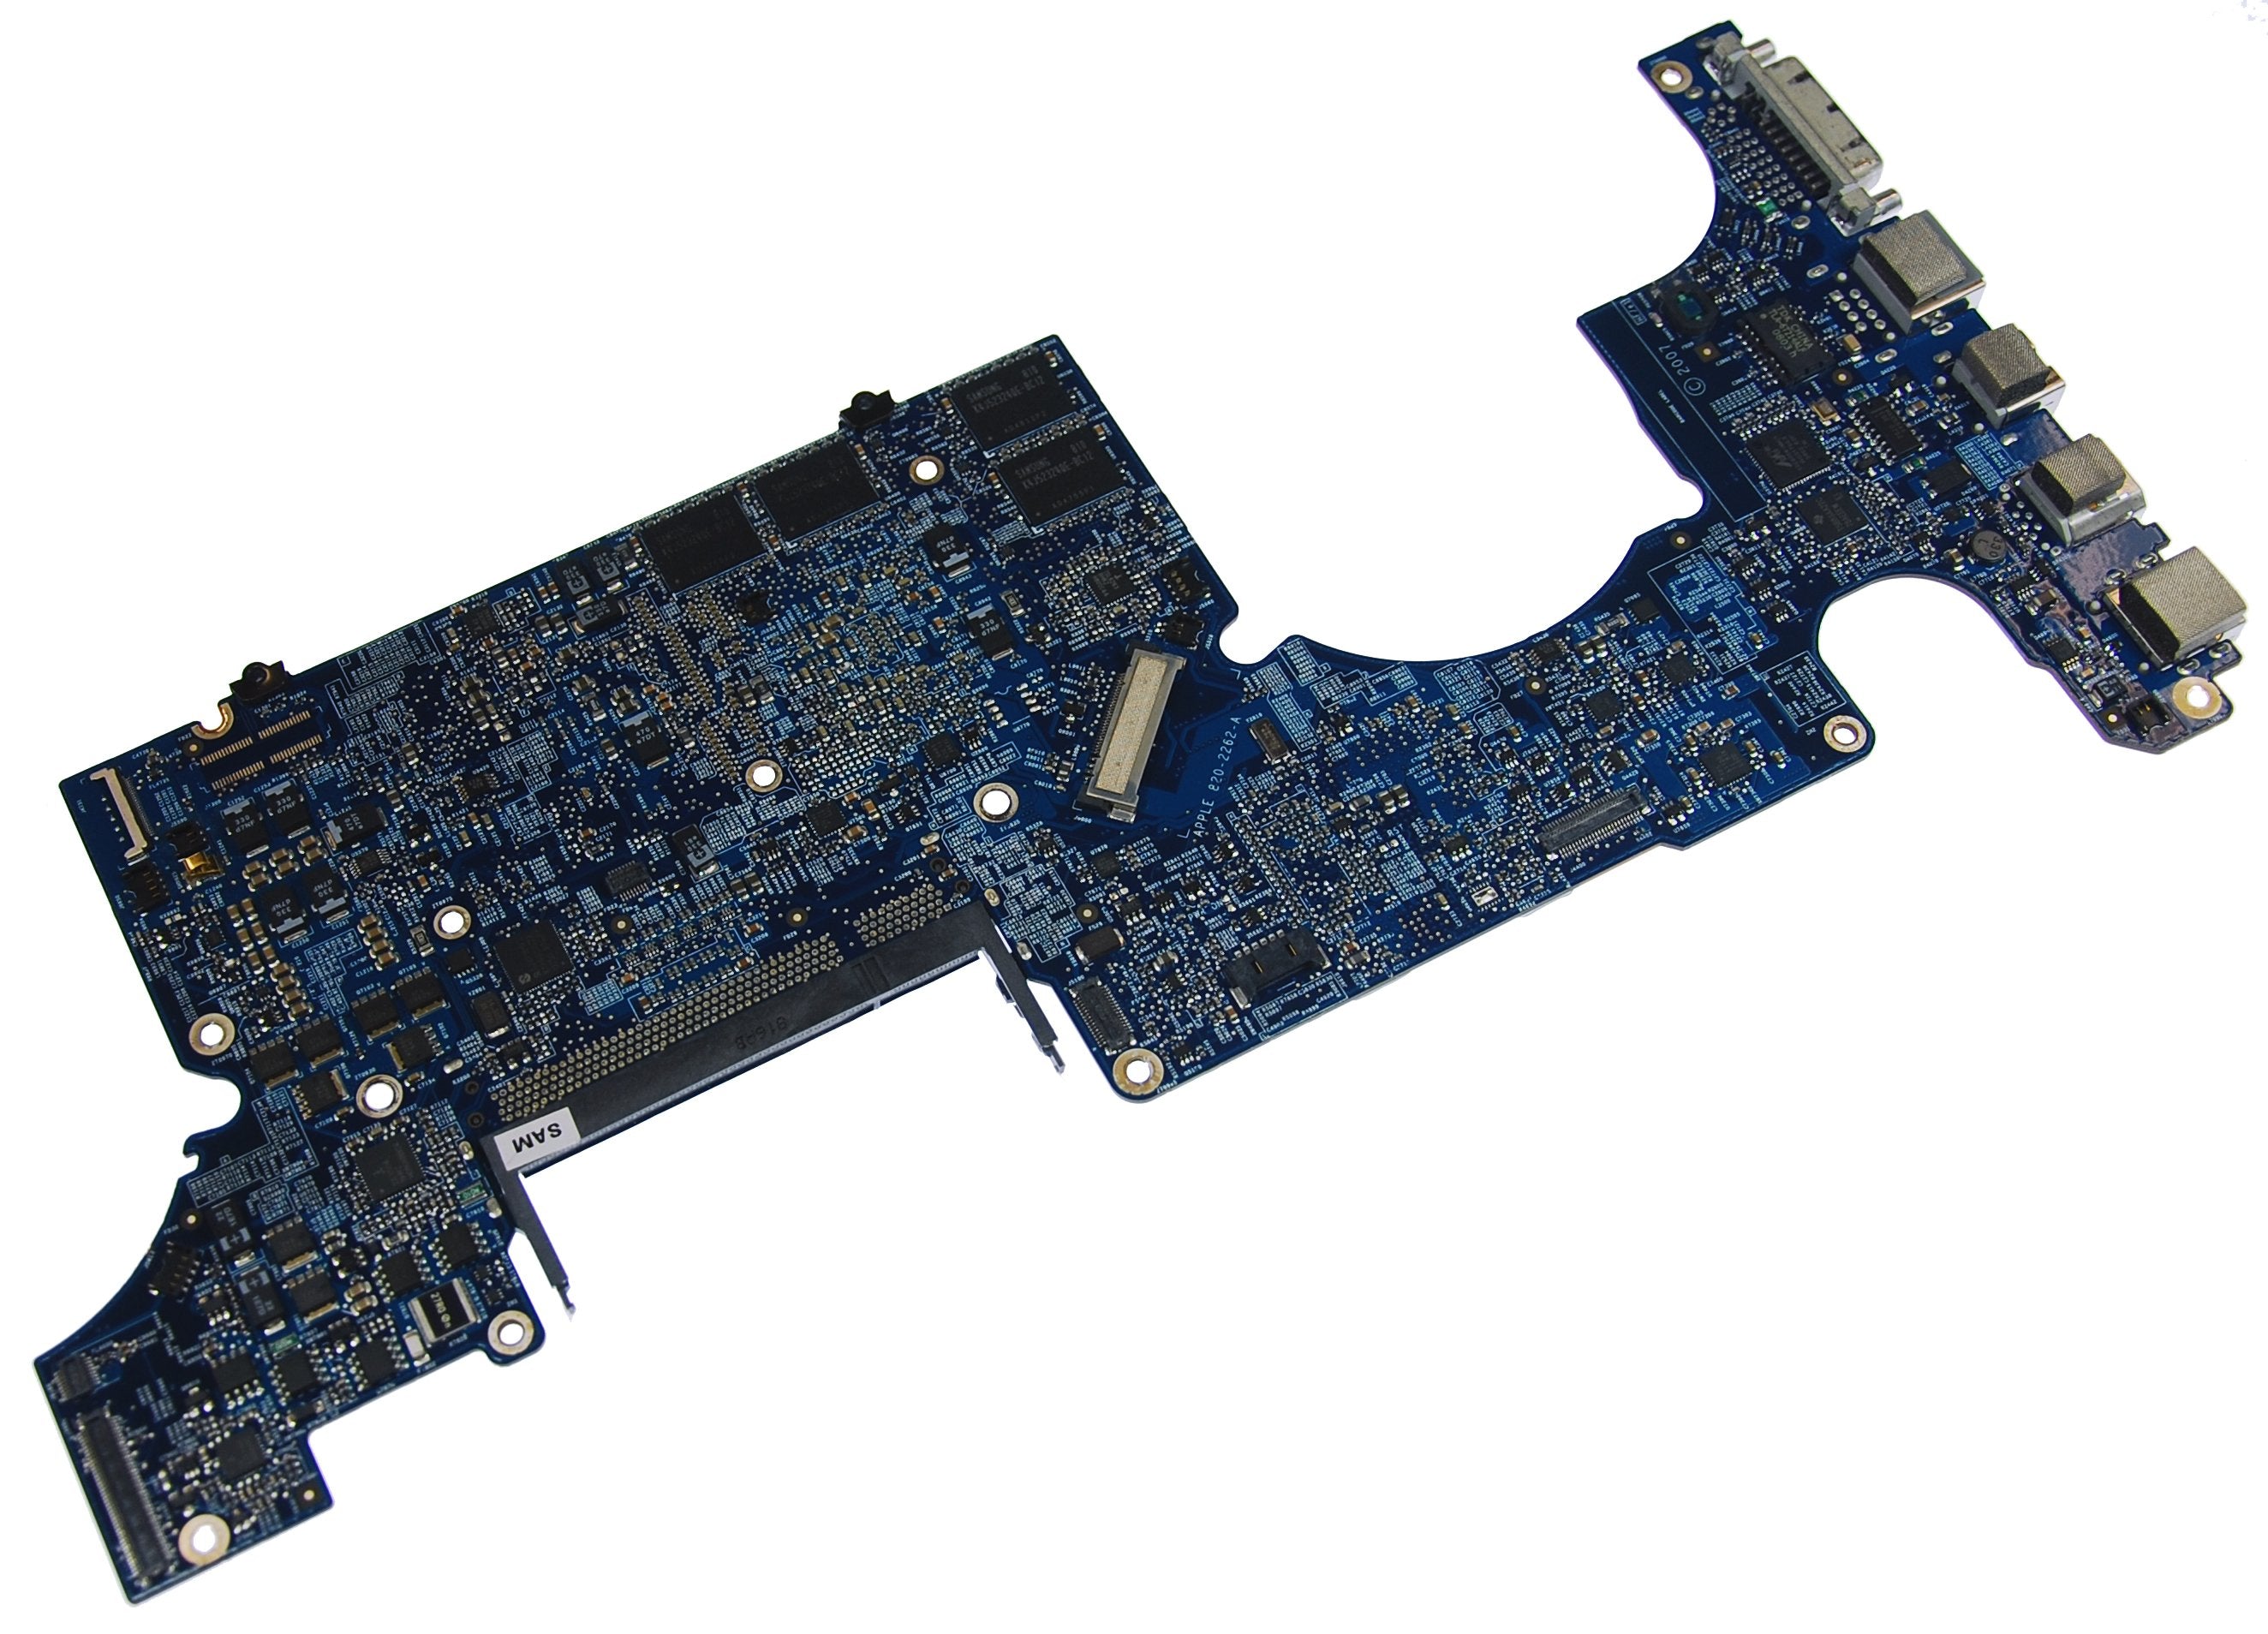 MacBook Pro 17" (Model A1261) 2.5 GHz Logic Board